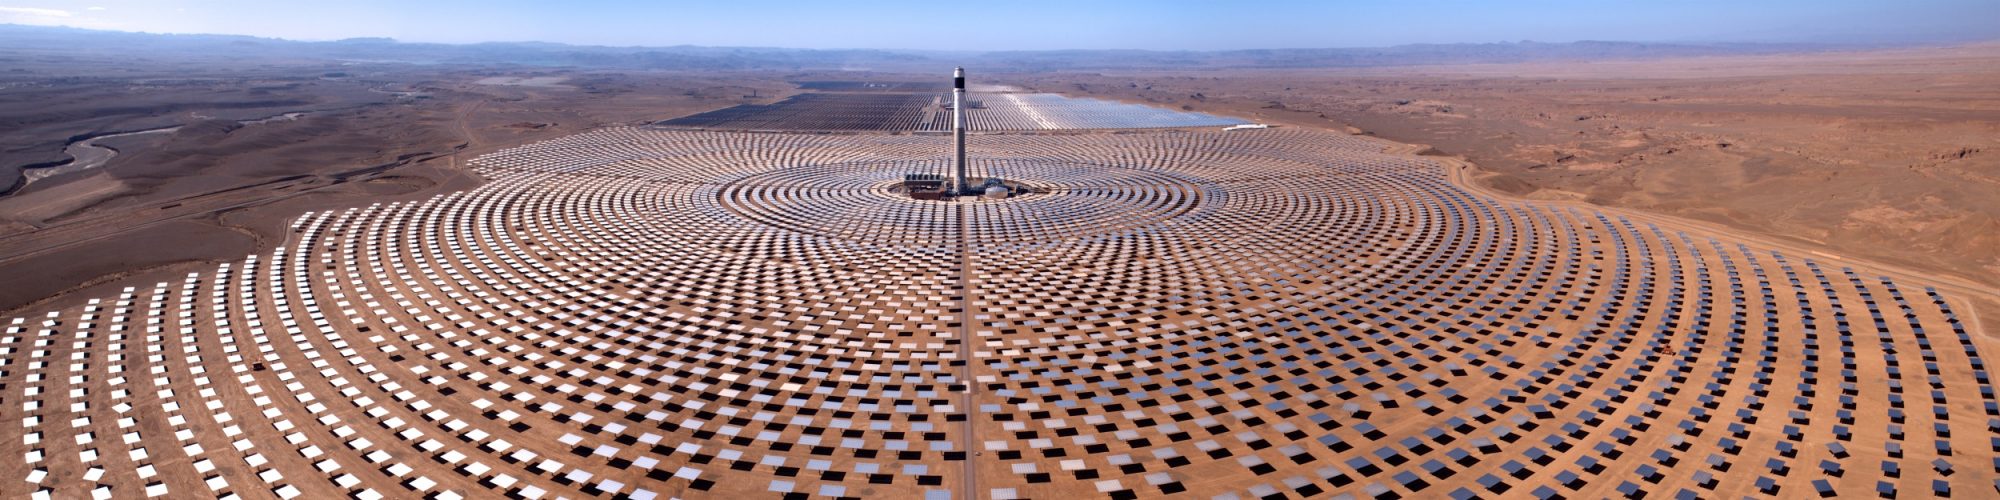 Noor solar power in Morocco